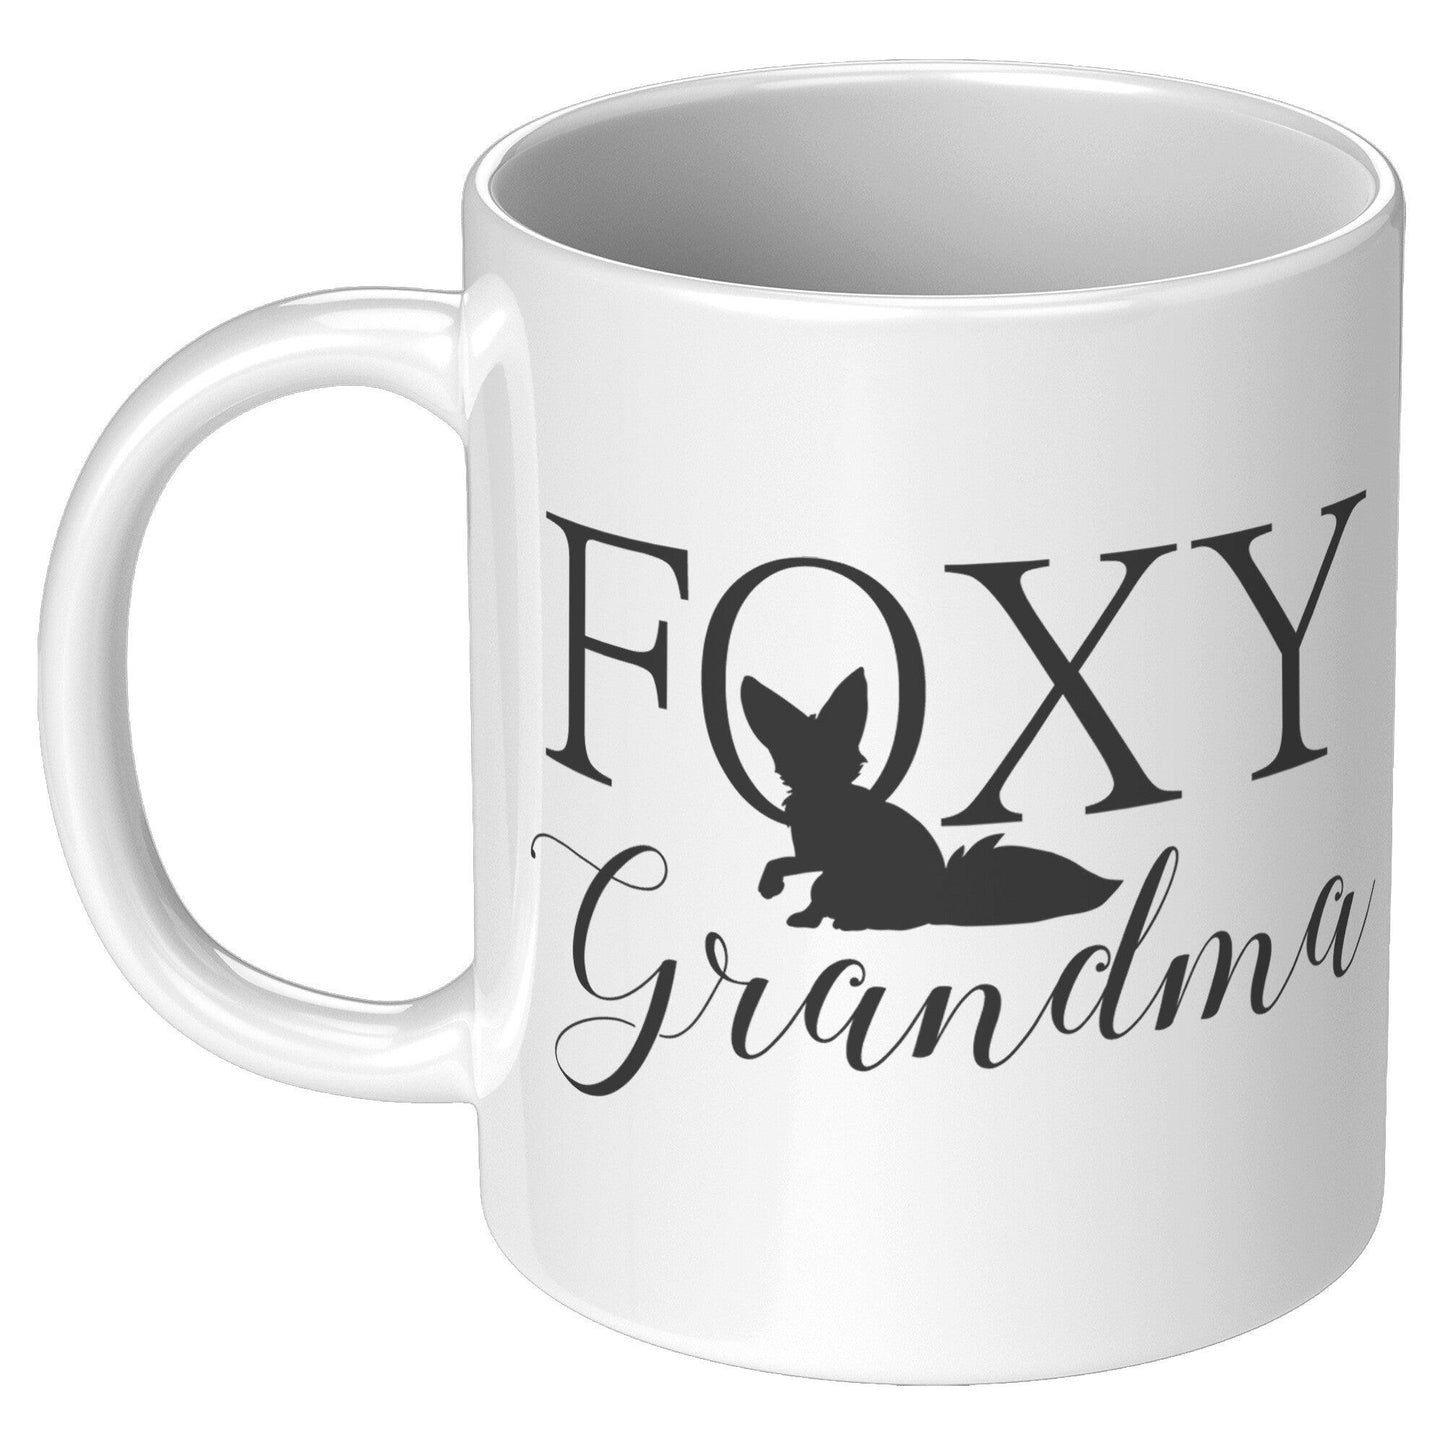 Foxy Grandma White Mug - TheGivenGet